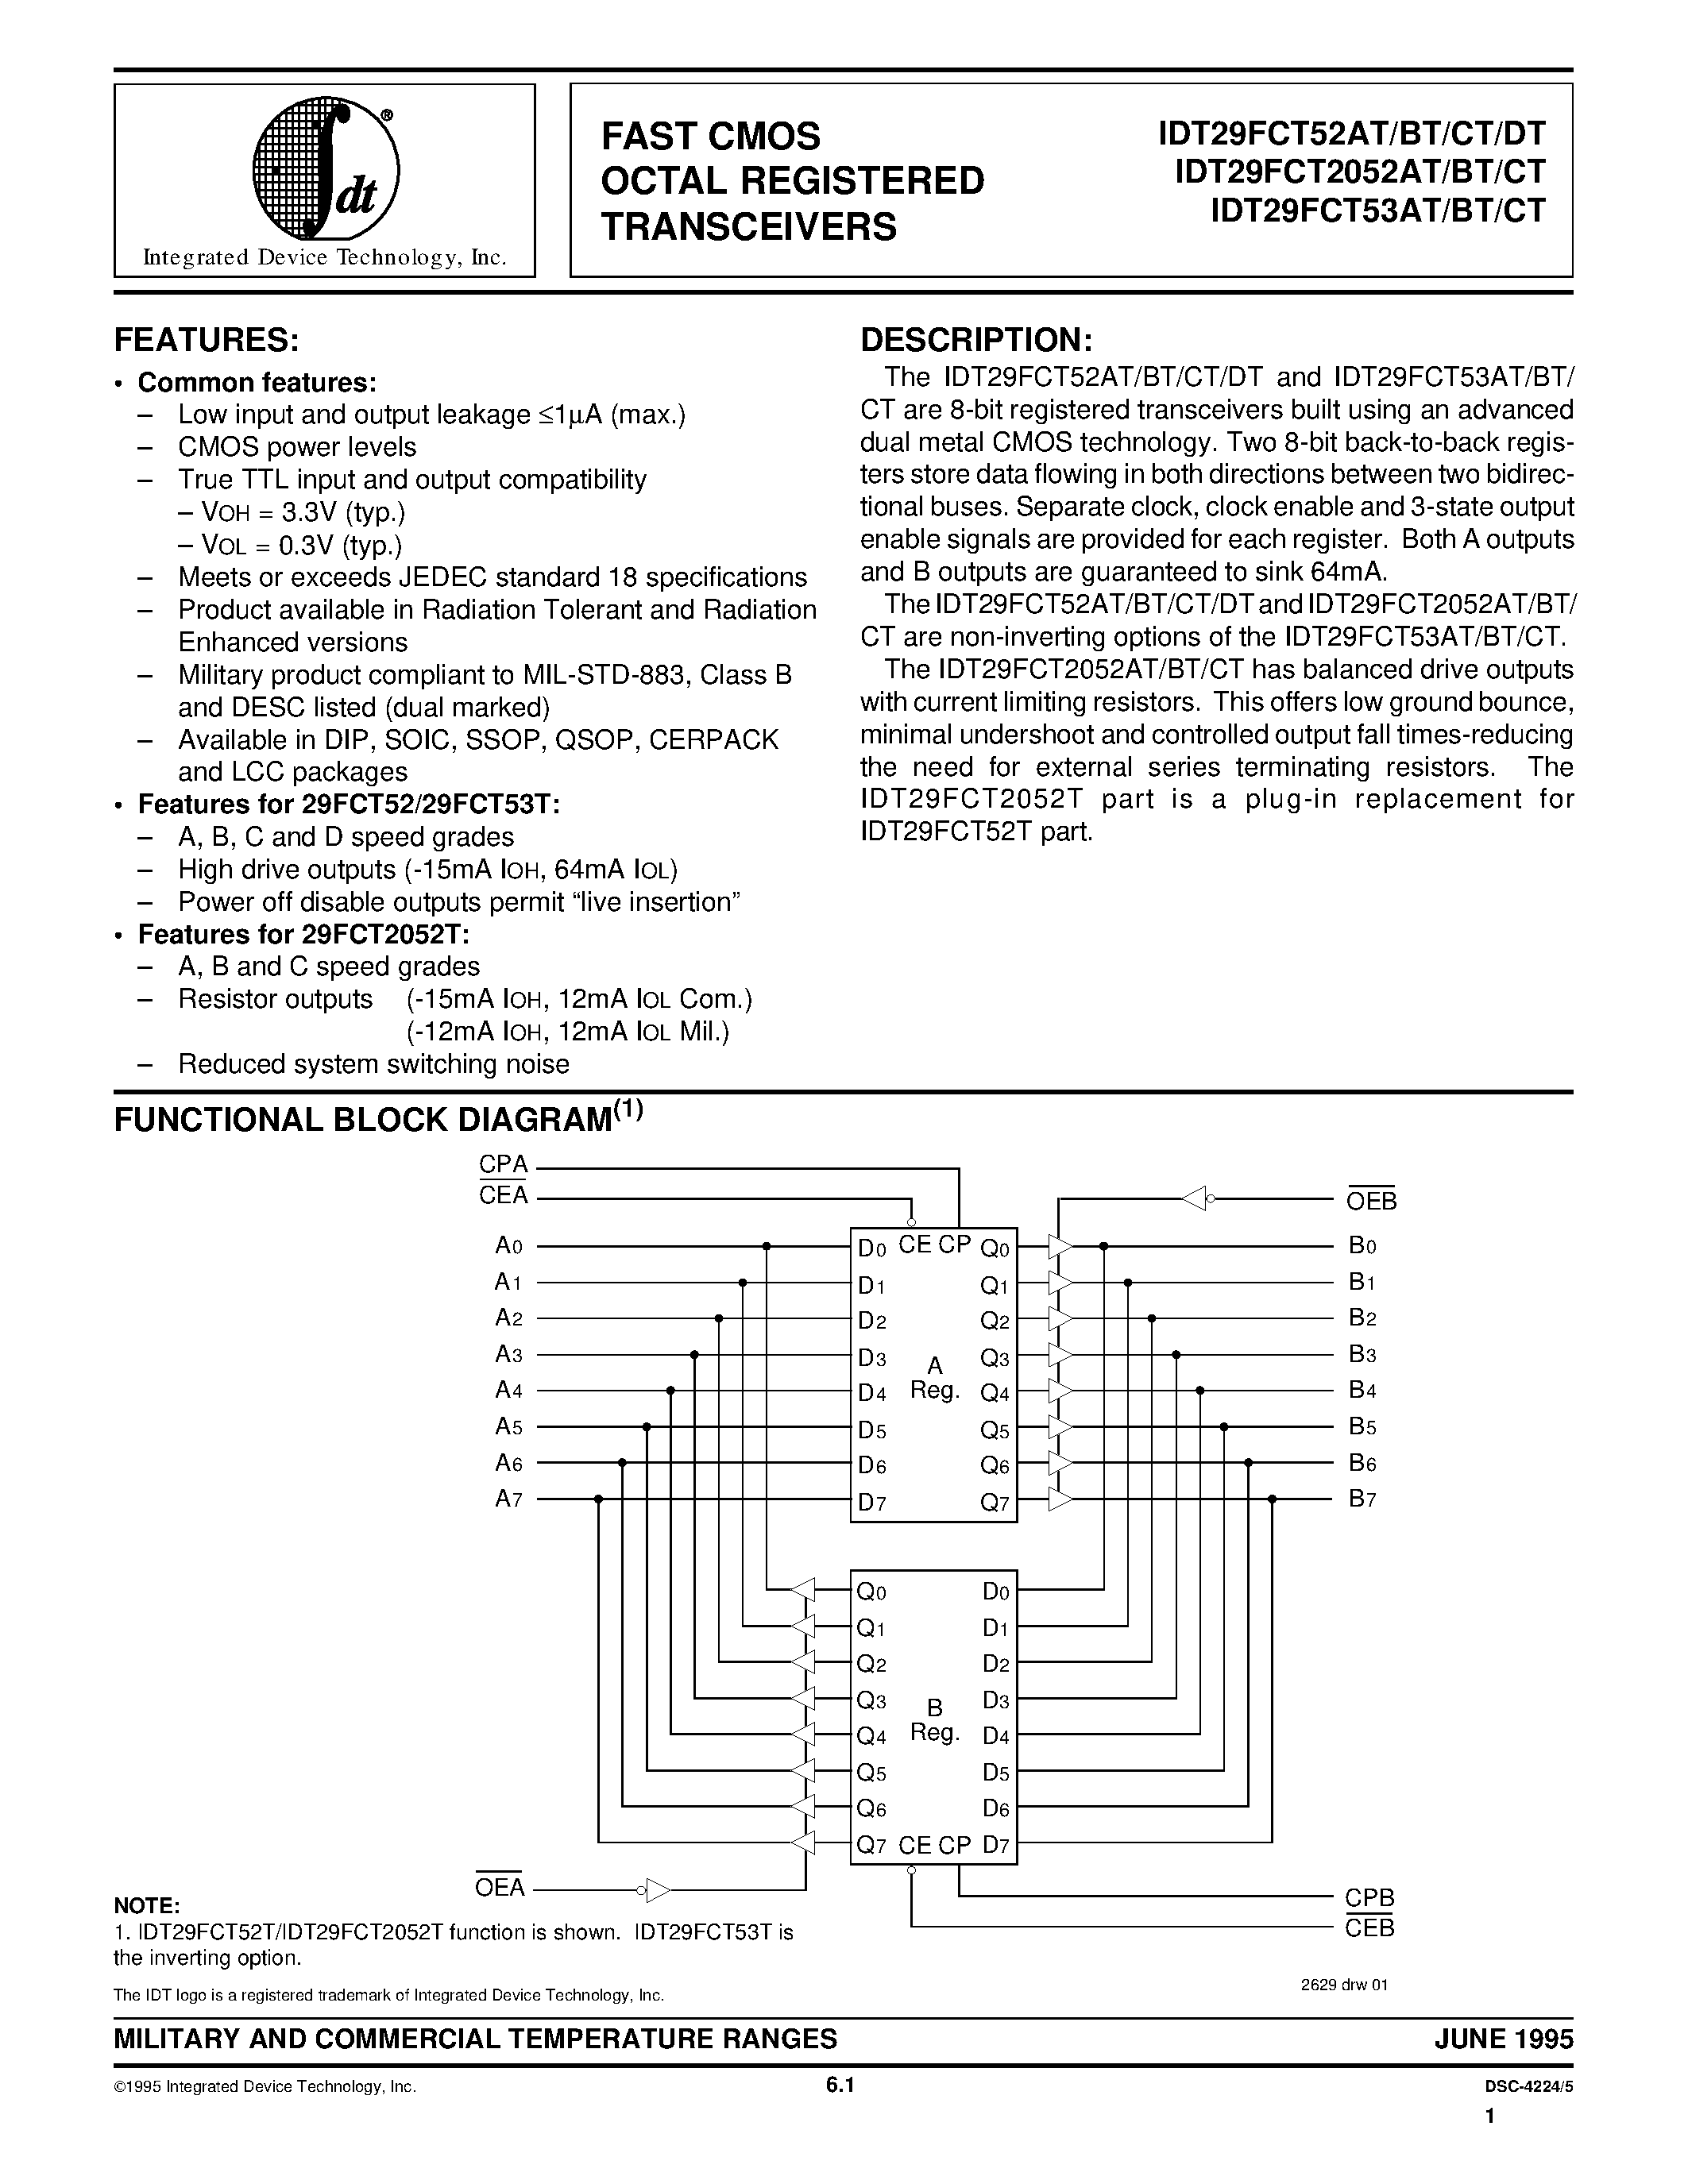 Datasheet 7429FCT2052ATD - FAST CMOS OCTAL REGISTERED TRANSCEIVERS page 1